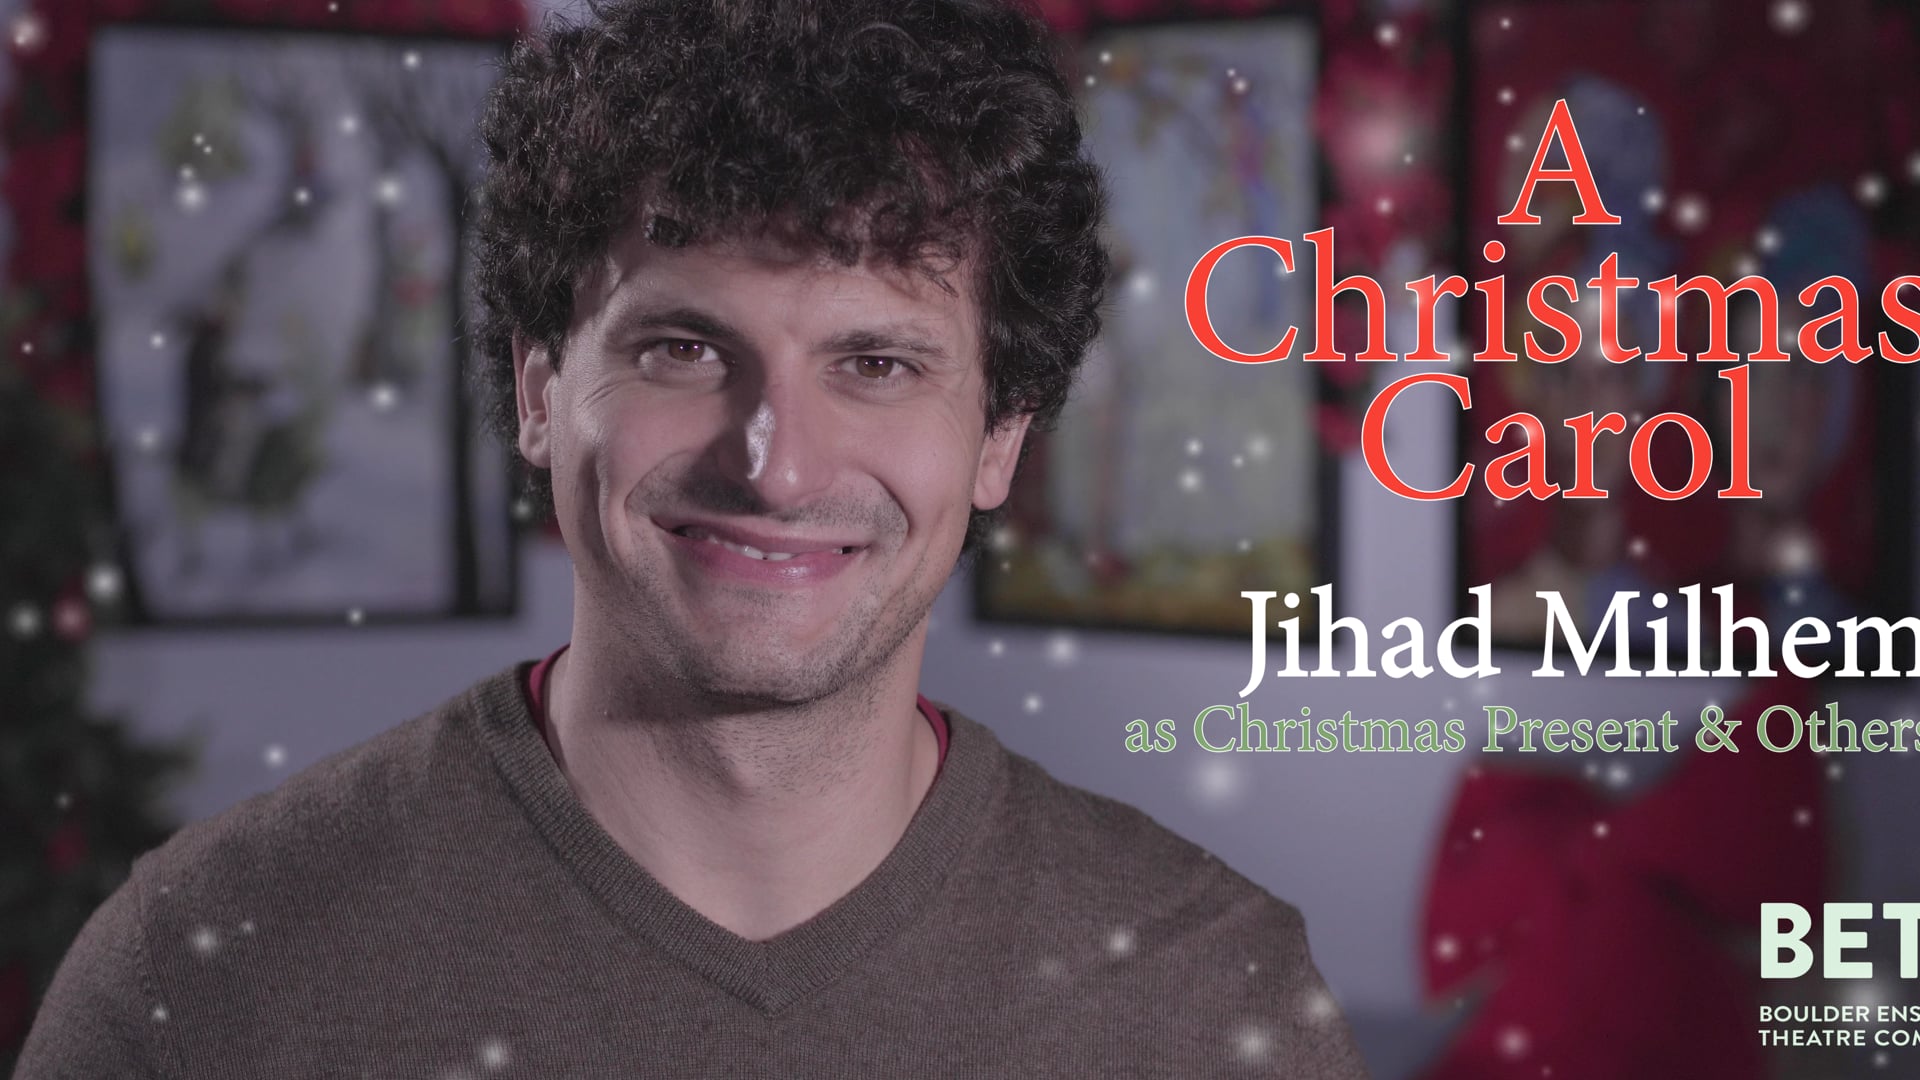 BETC - Meet the Cast of "A Christmas Carol" (Jihad Milhem as Christmas Present & Others)